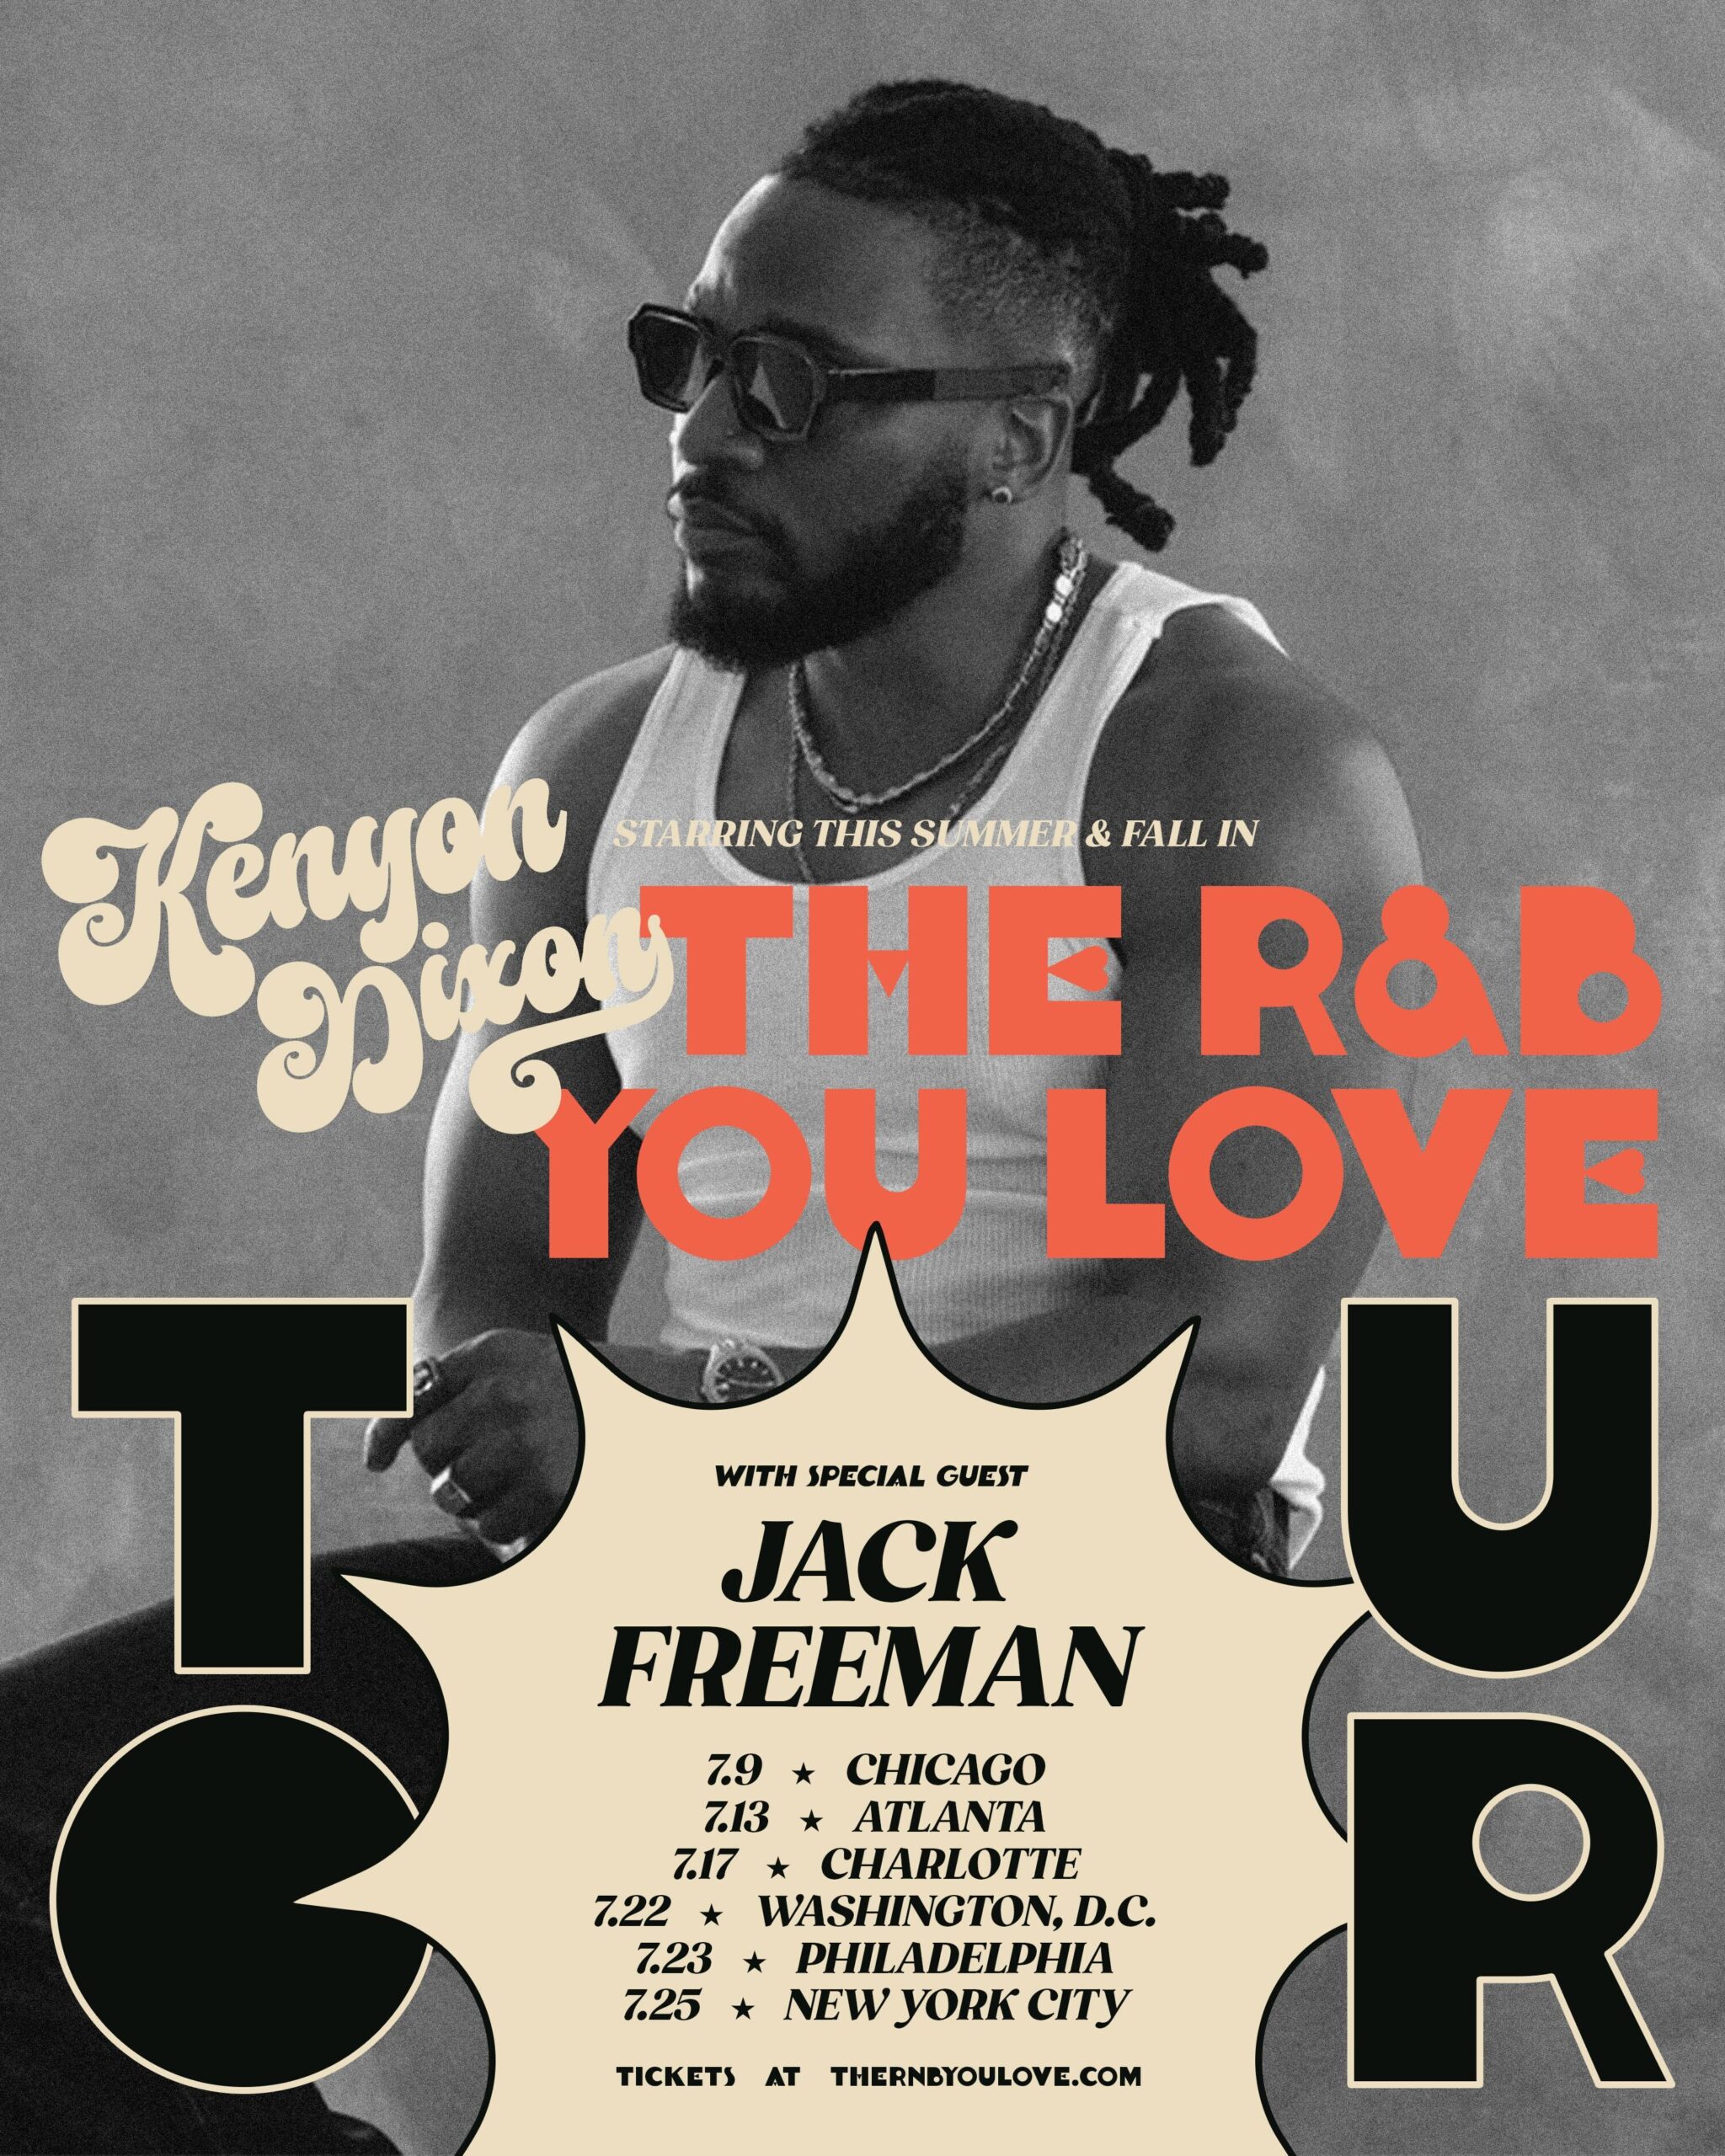 HOUSTON-BASED SINGER JACK FREEMAN JOINS THE R&B YOU LOVE TOUR